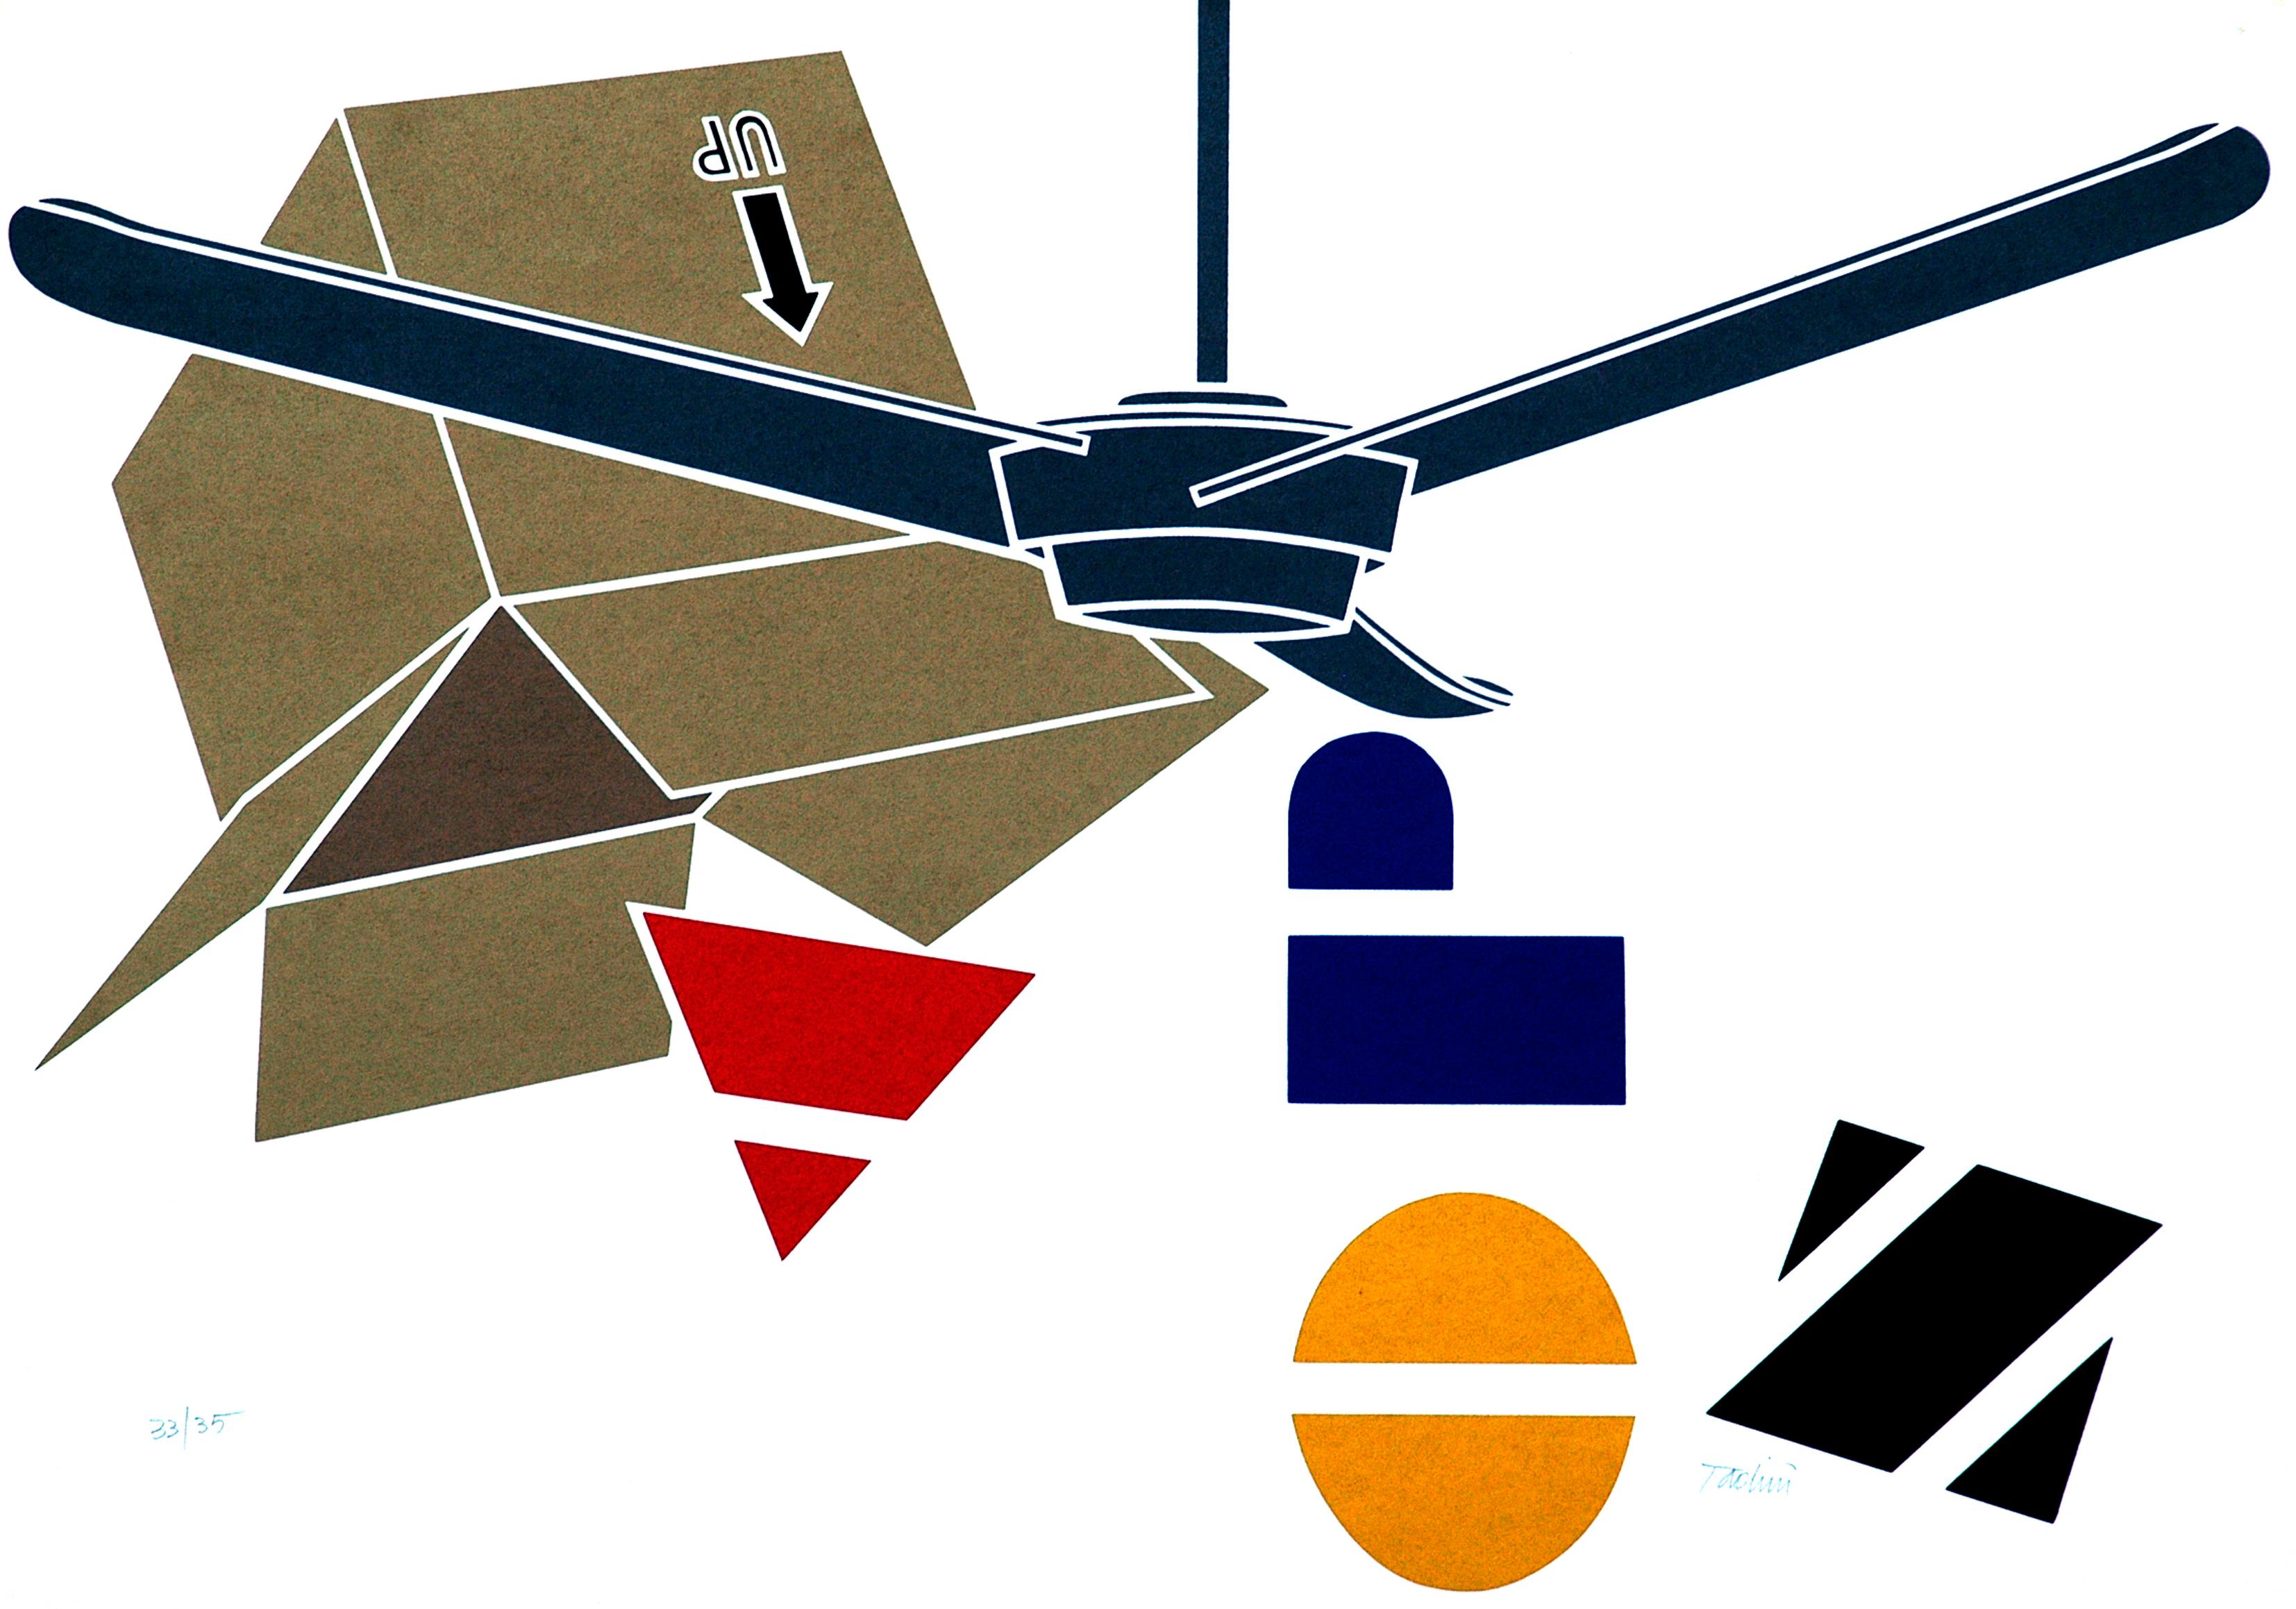 Emilio Tadini Abstract Print - Blade and Letters - Original Screen Print by E. Tadini - 1970 ca